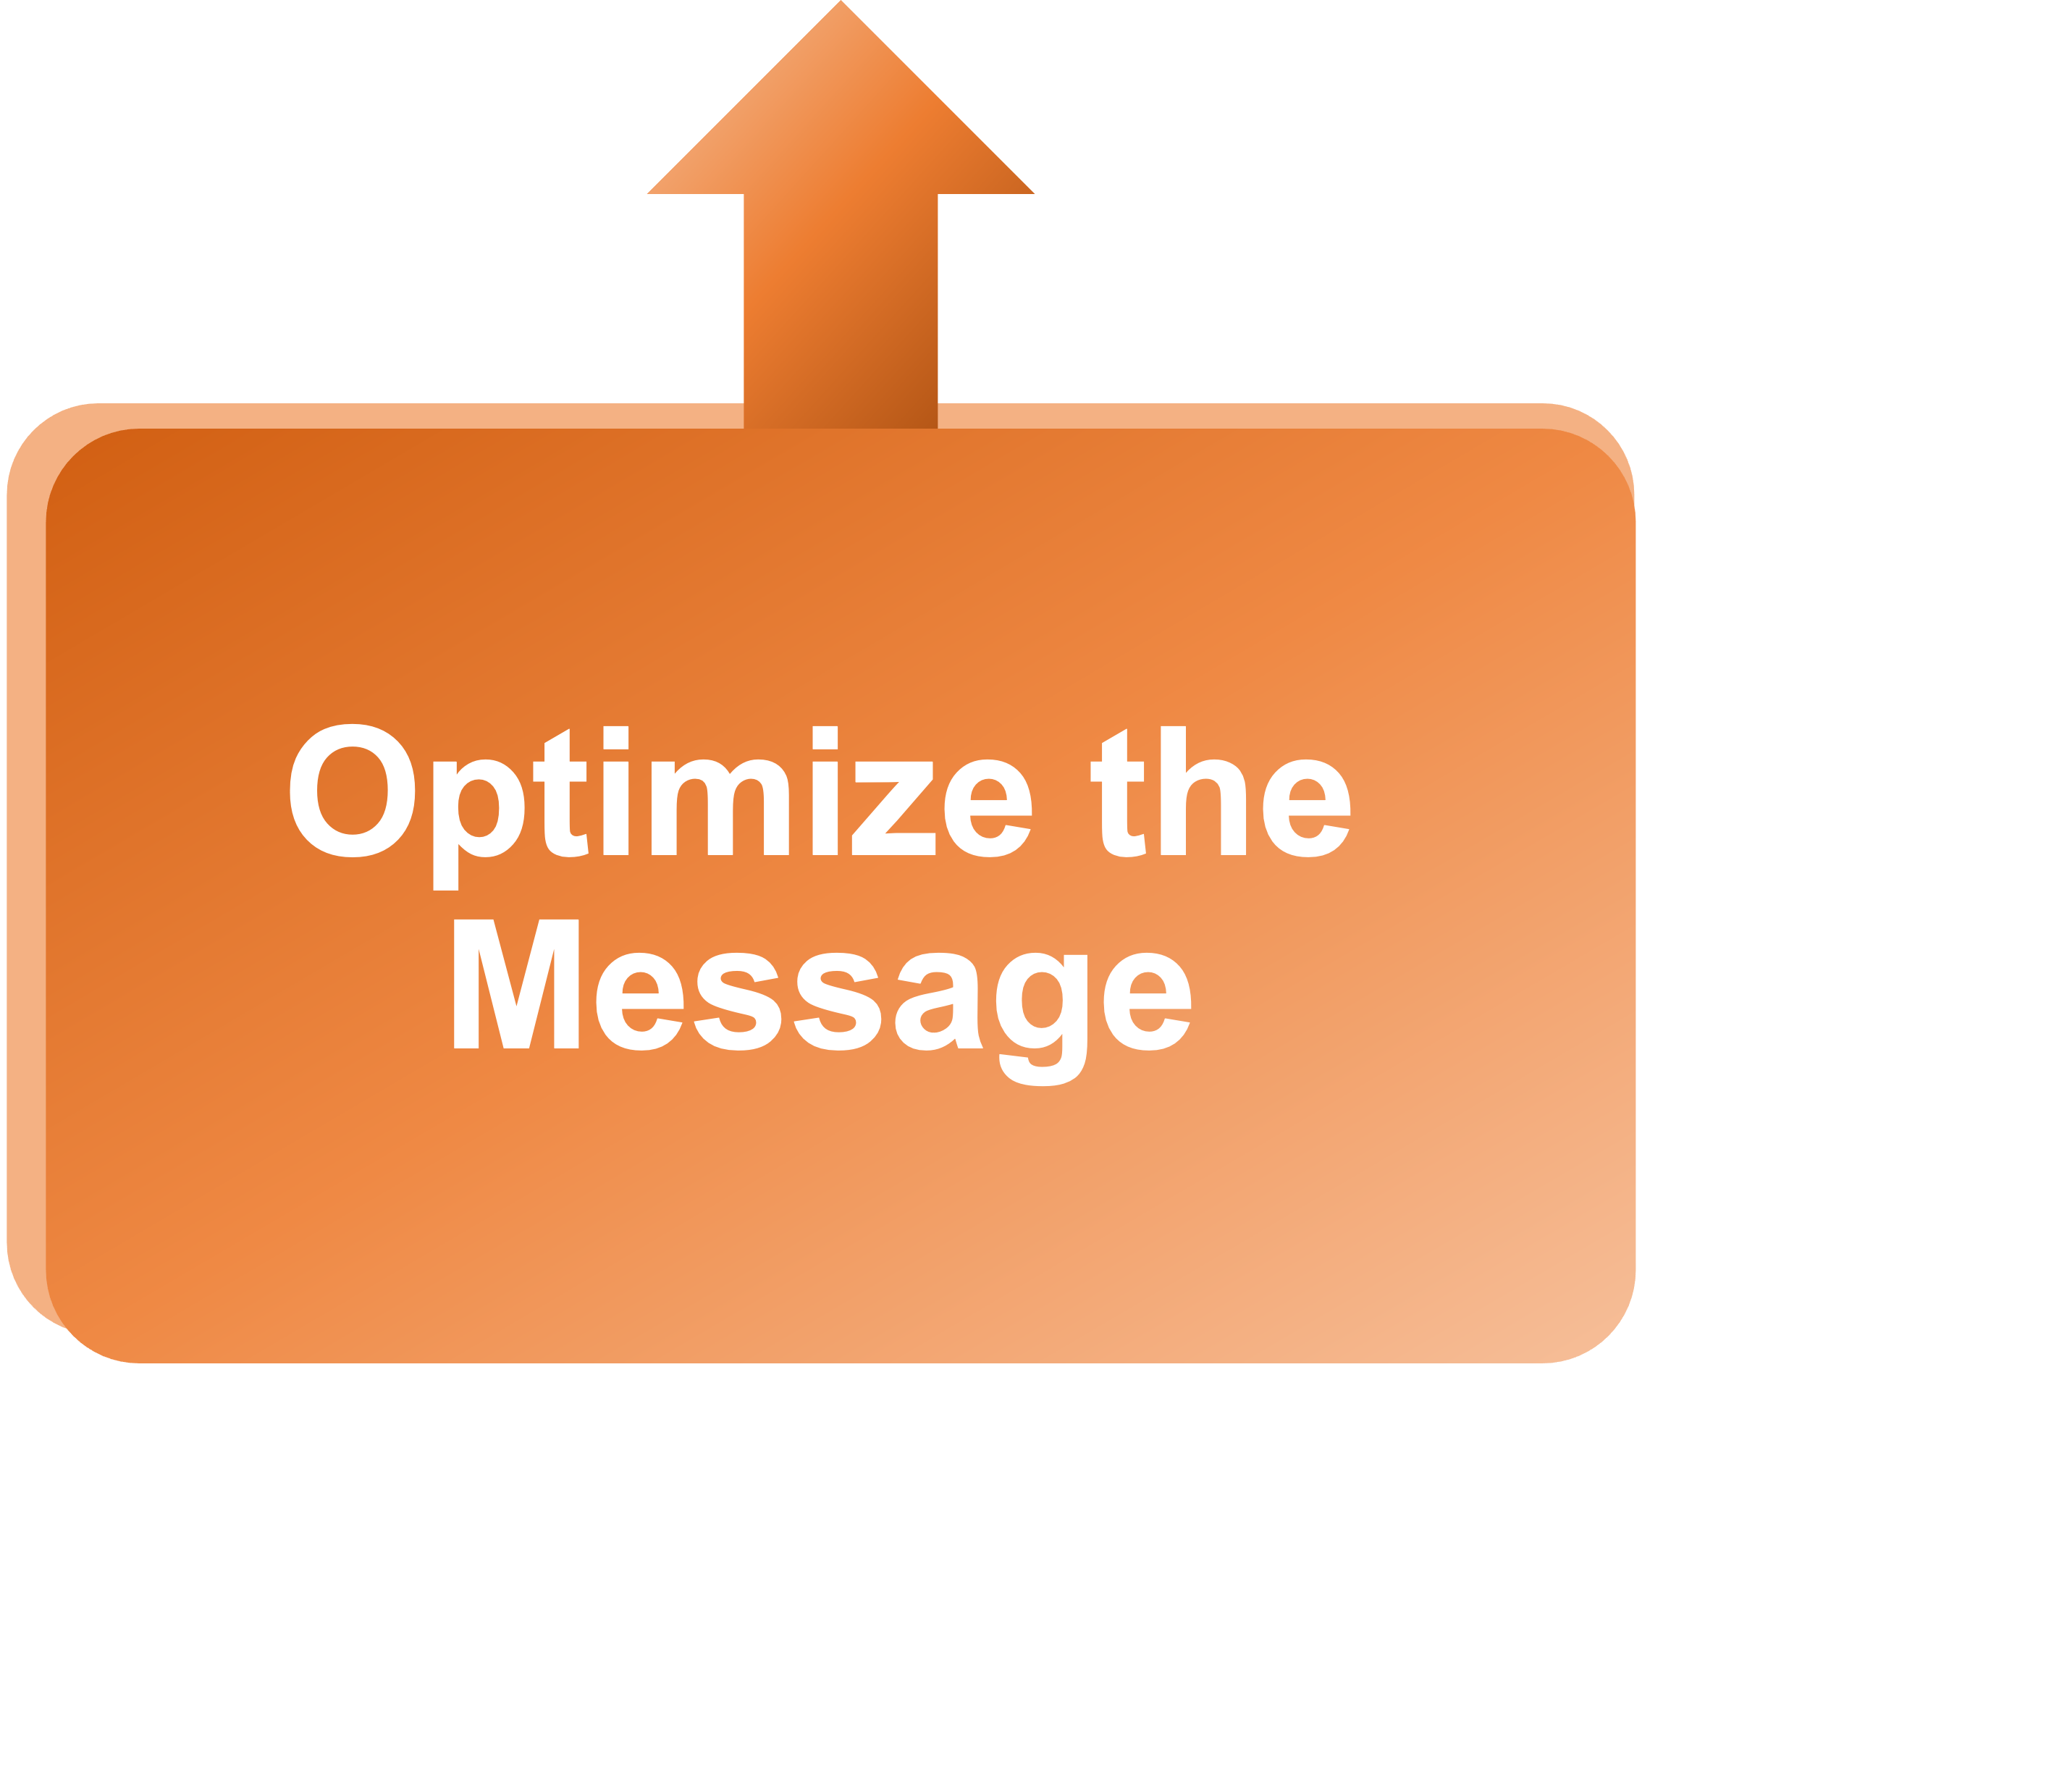 Optimize the Message